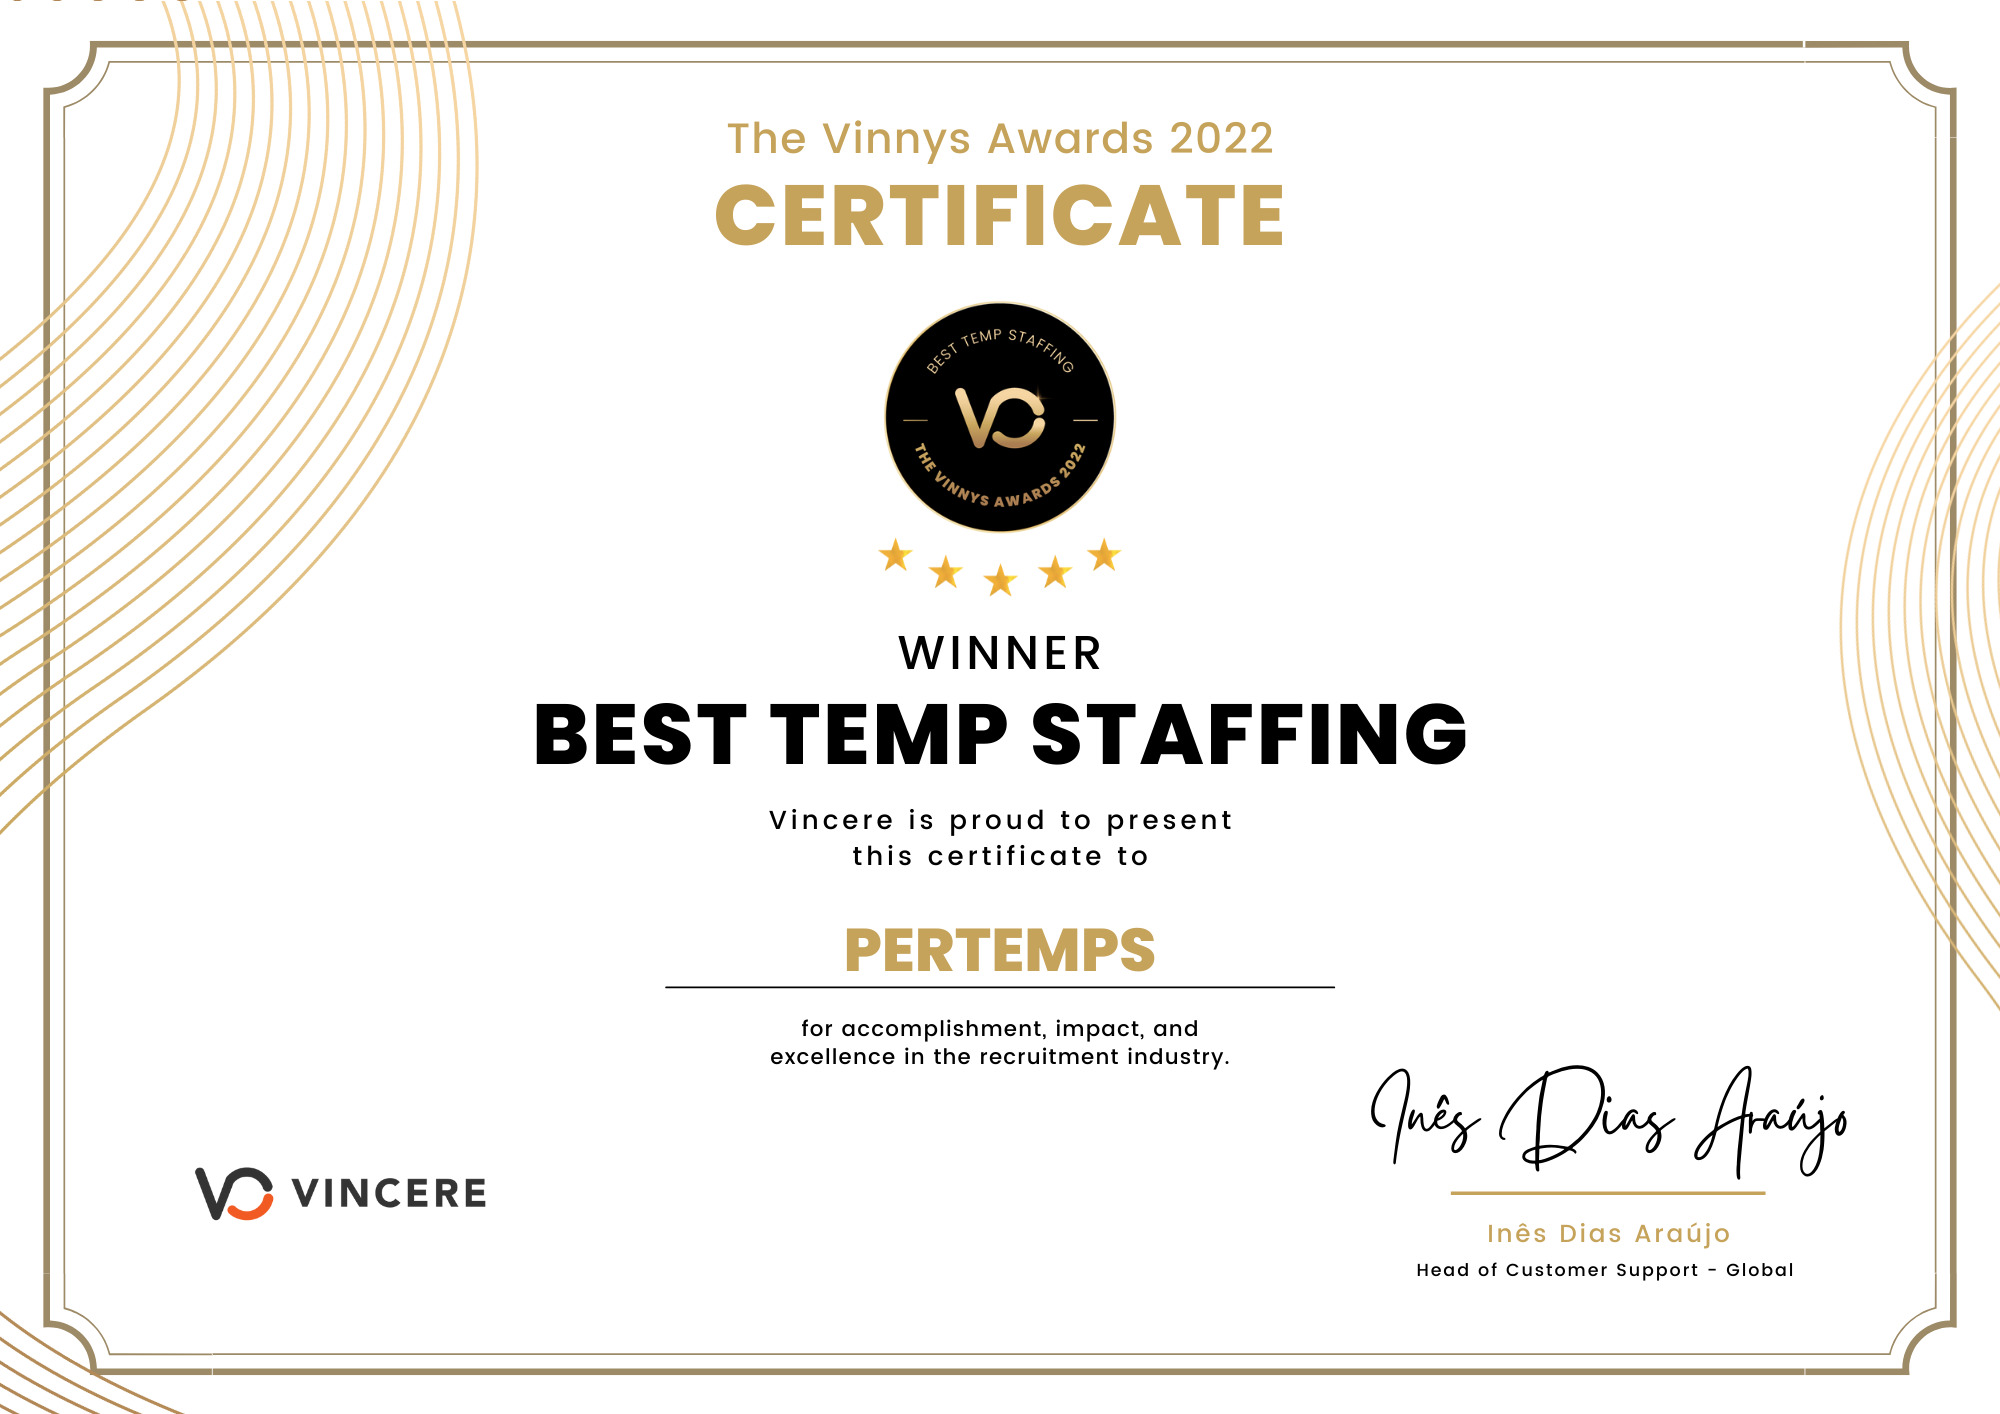 Vinnys UK Best Temp Staffing Winner